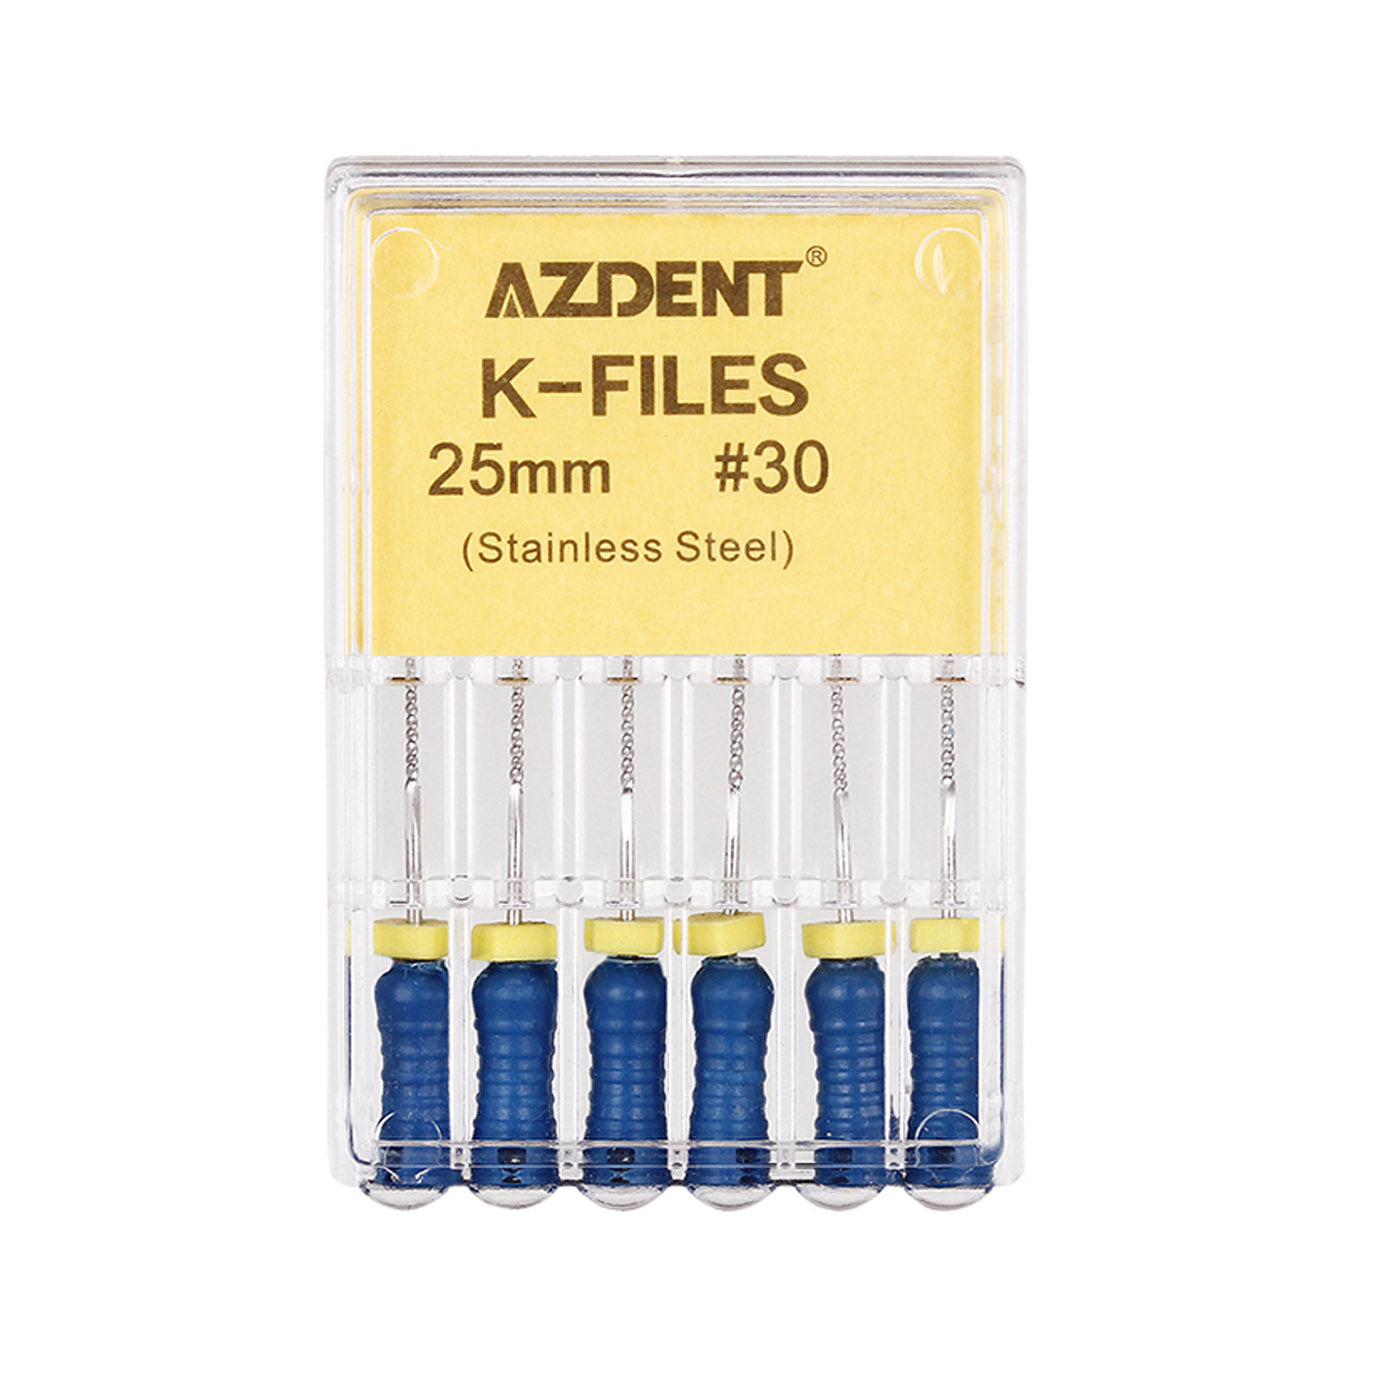 AZDENT Dental Hand K-Files Stainless Steel 25mm #30 Blue 6pcs/Box-azdentall.com